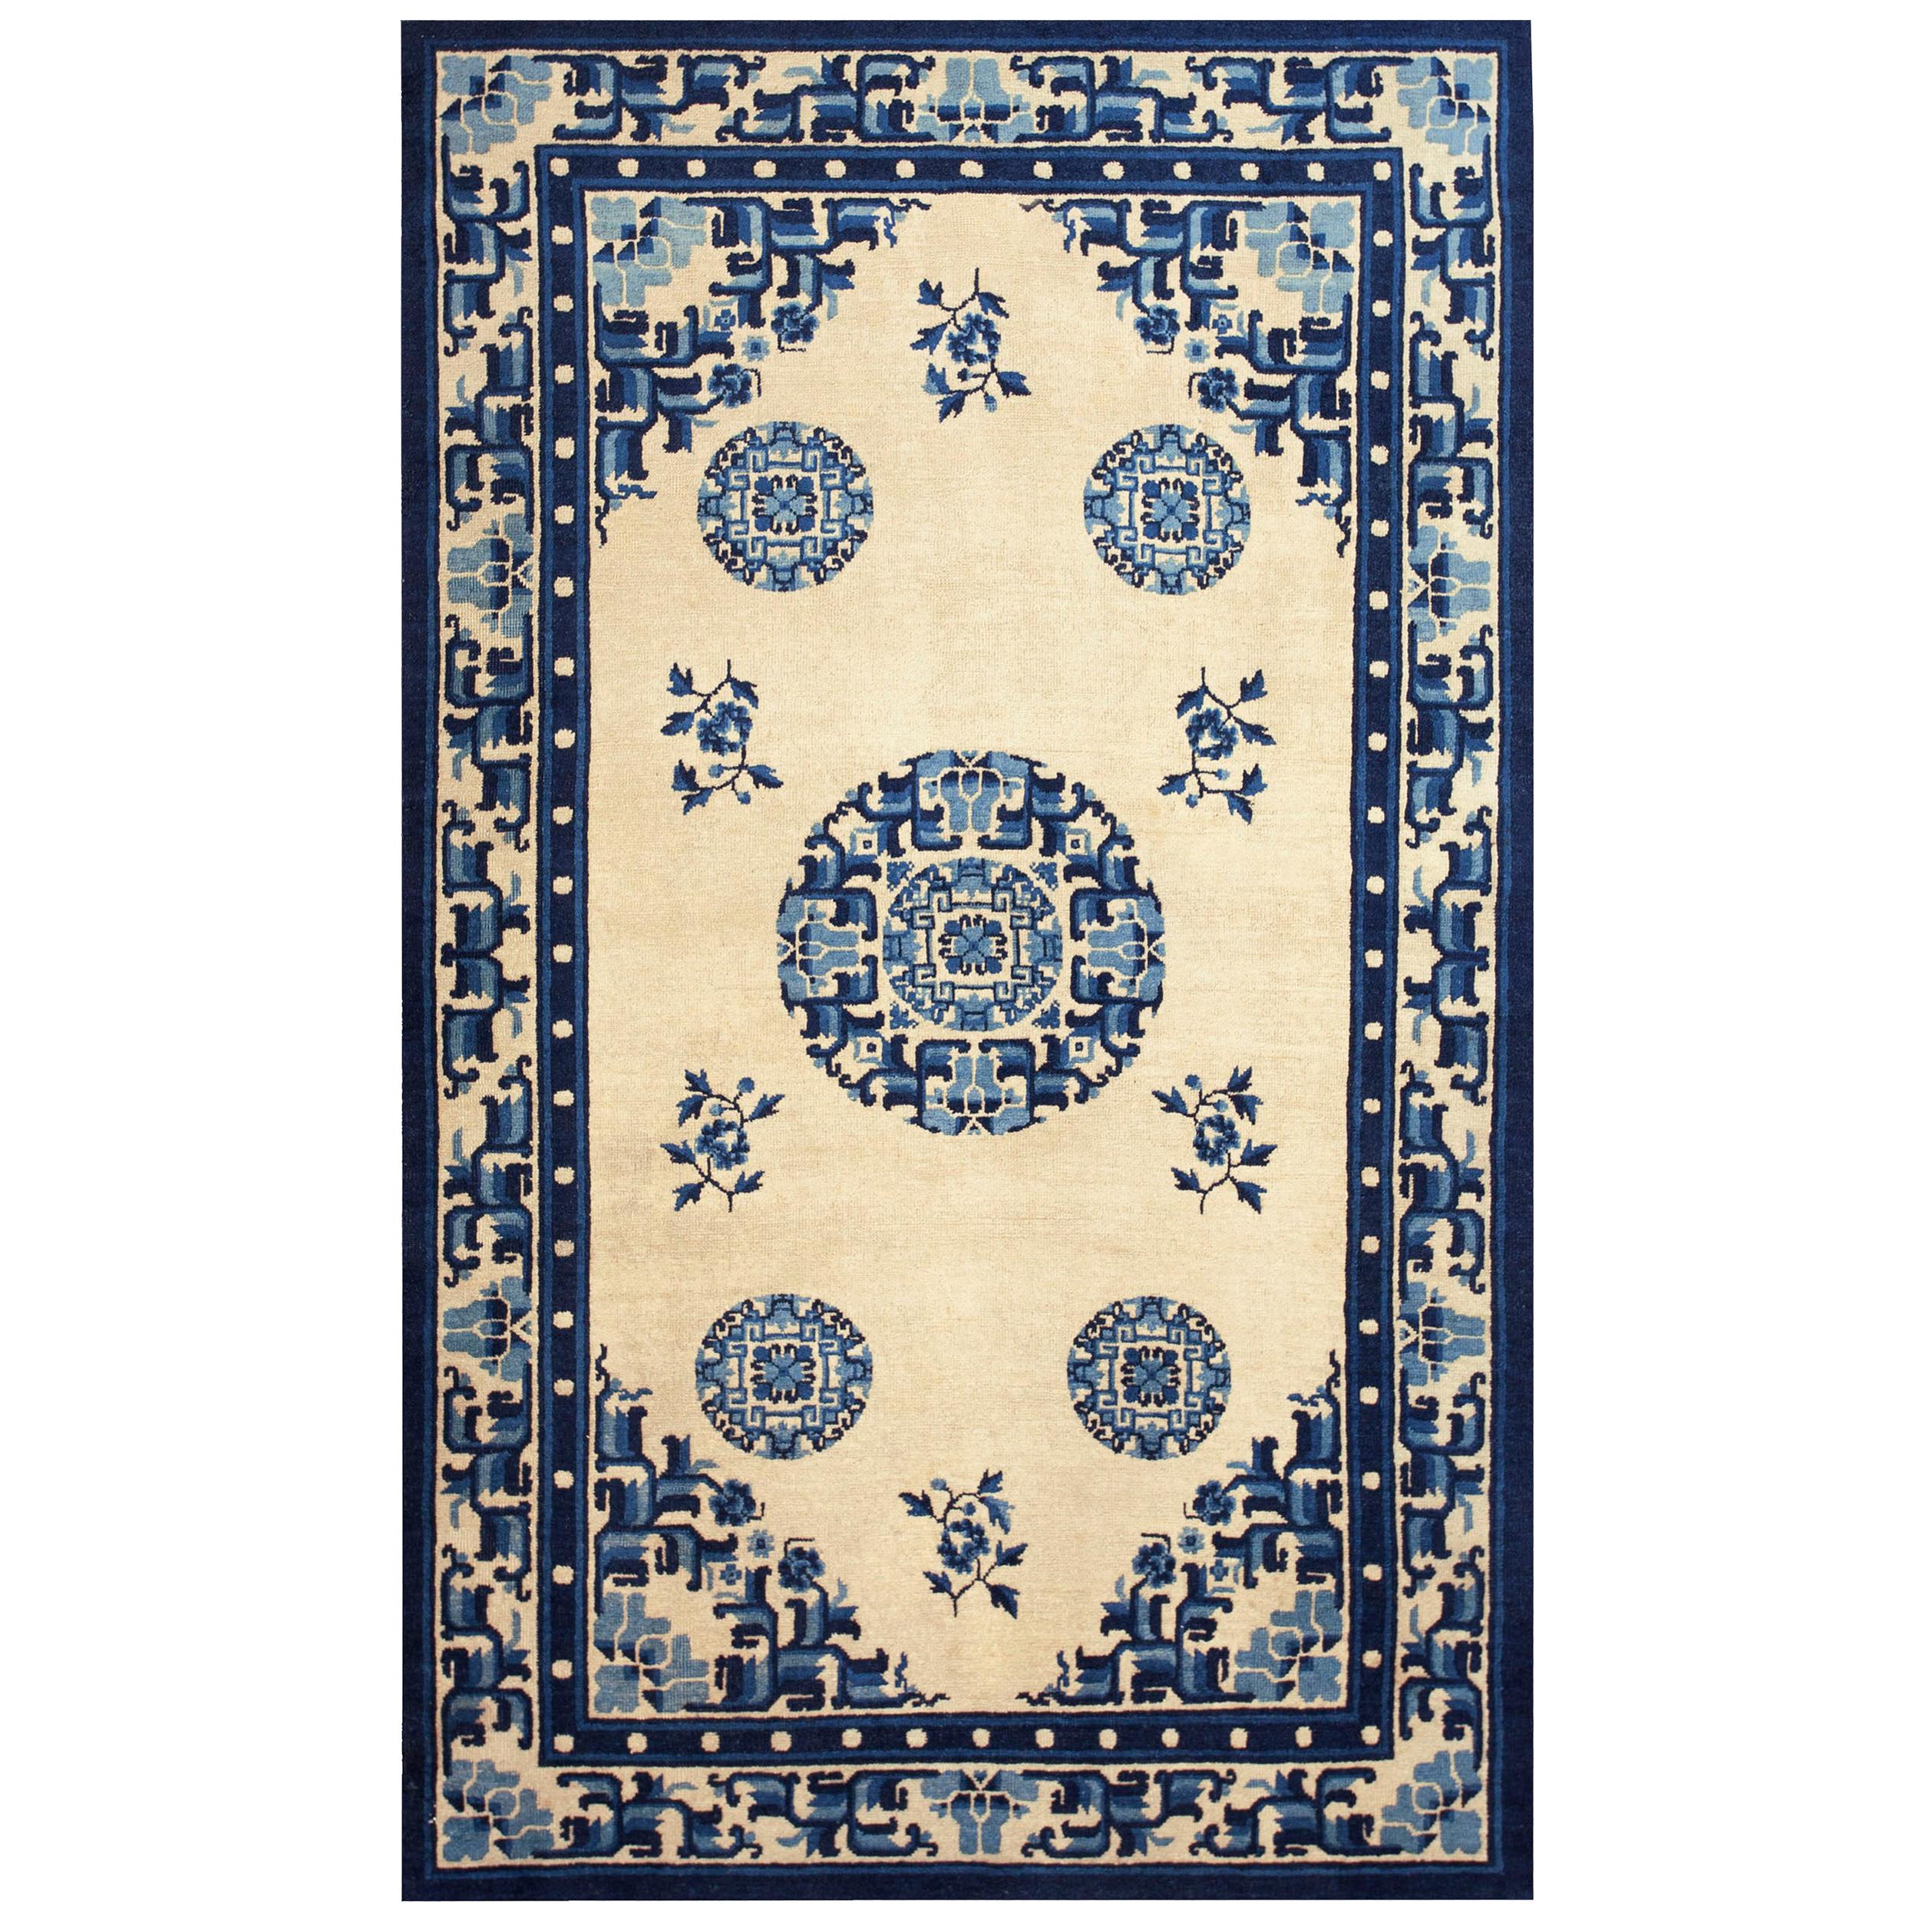 Early 20th Century Chinese Peking Carpet ( 5' x 8'4" - 152 x 254 )